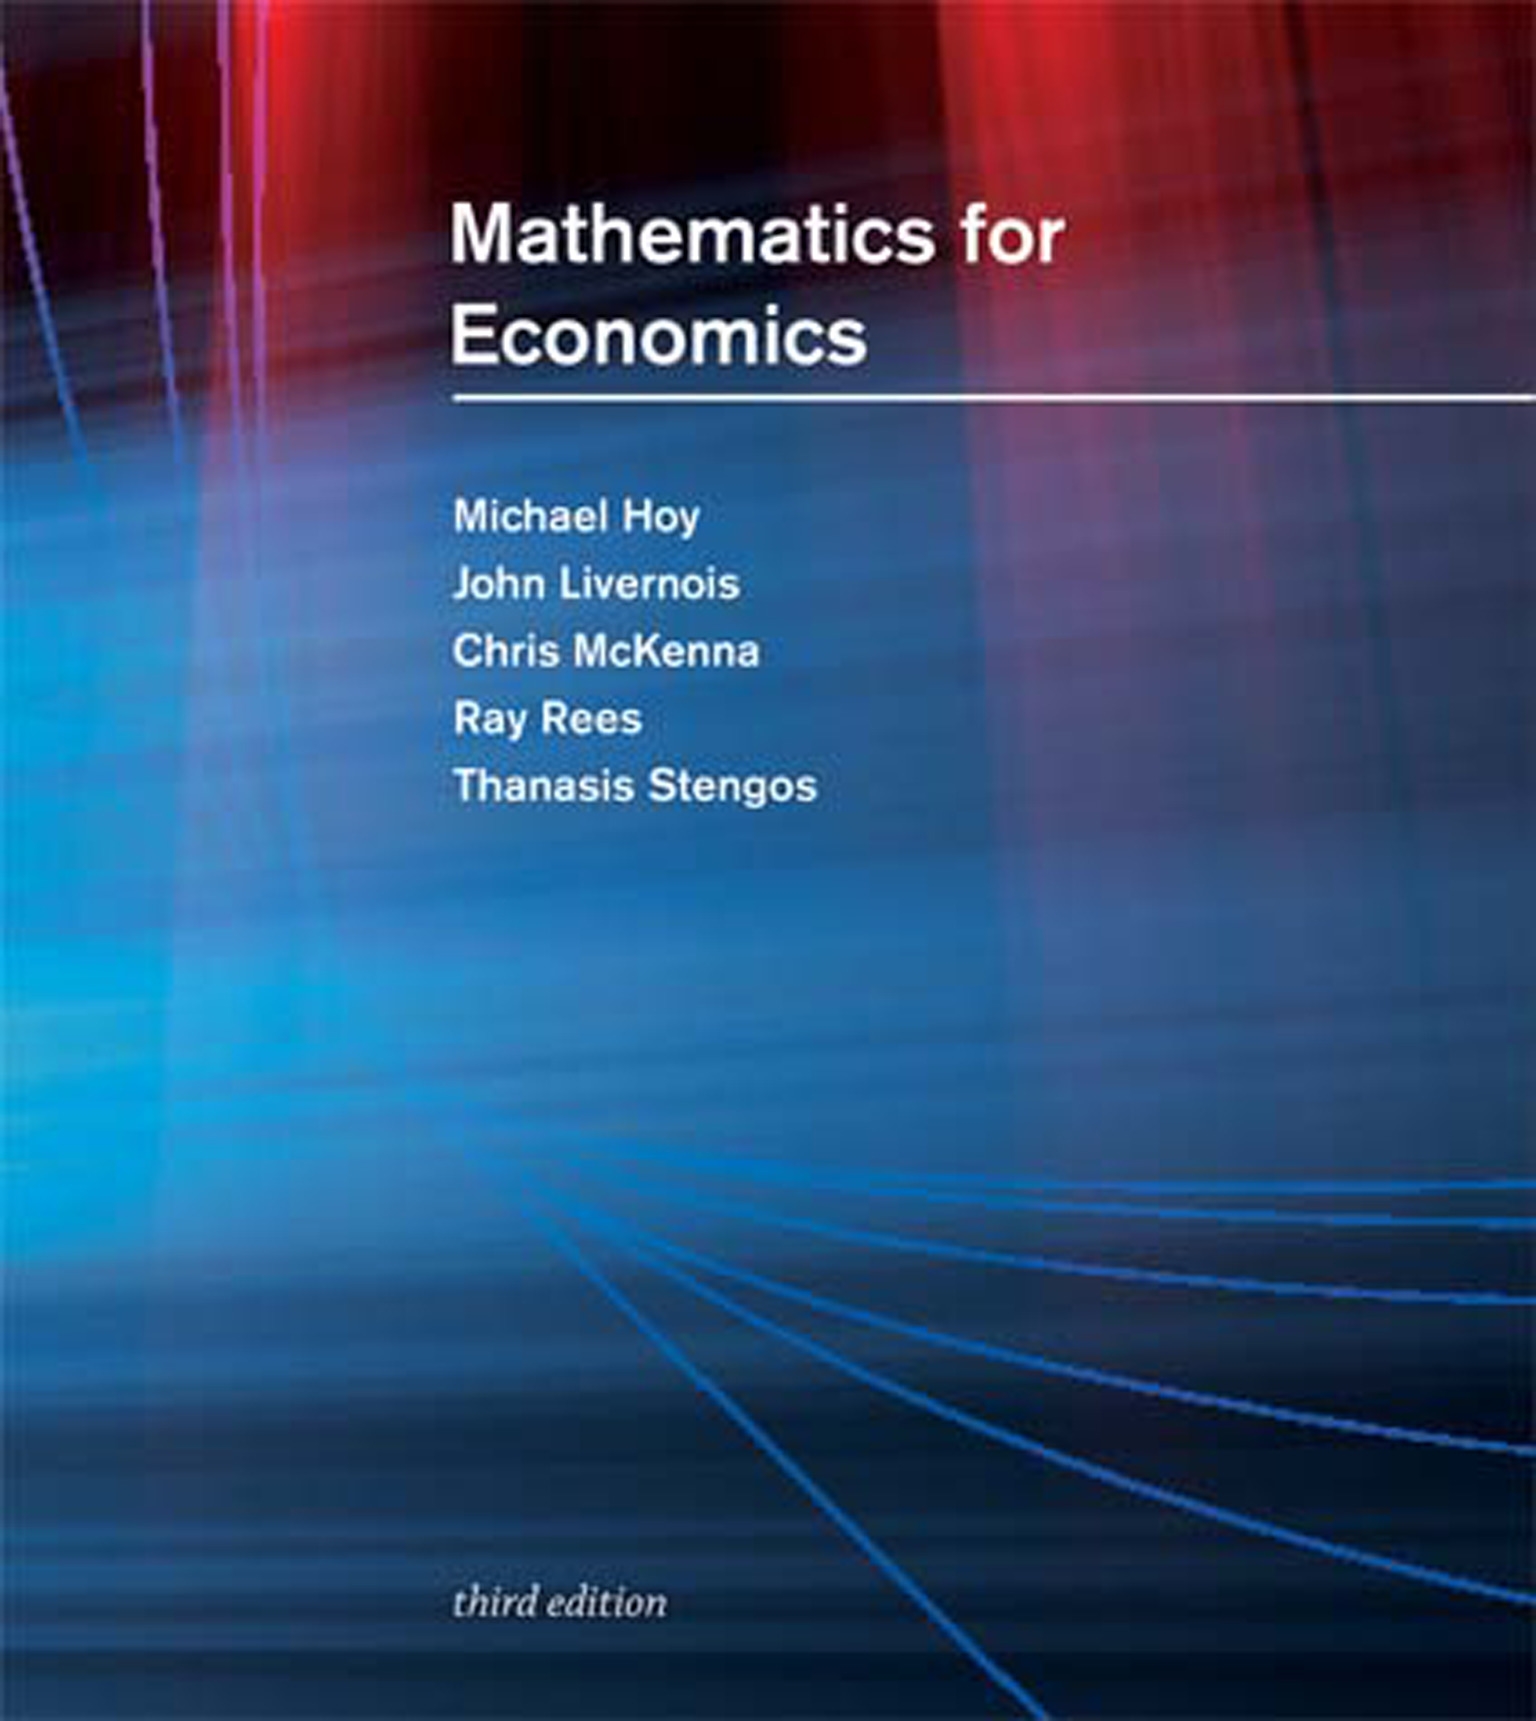 Mathematics for Economics, third edition by Michael Hoy Penguin Books New Zealand